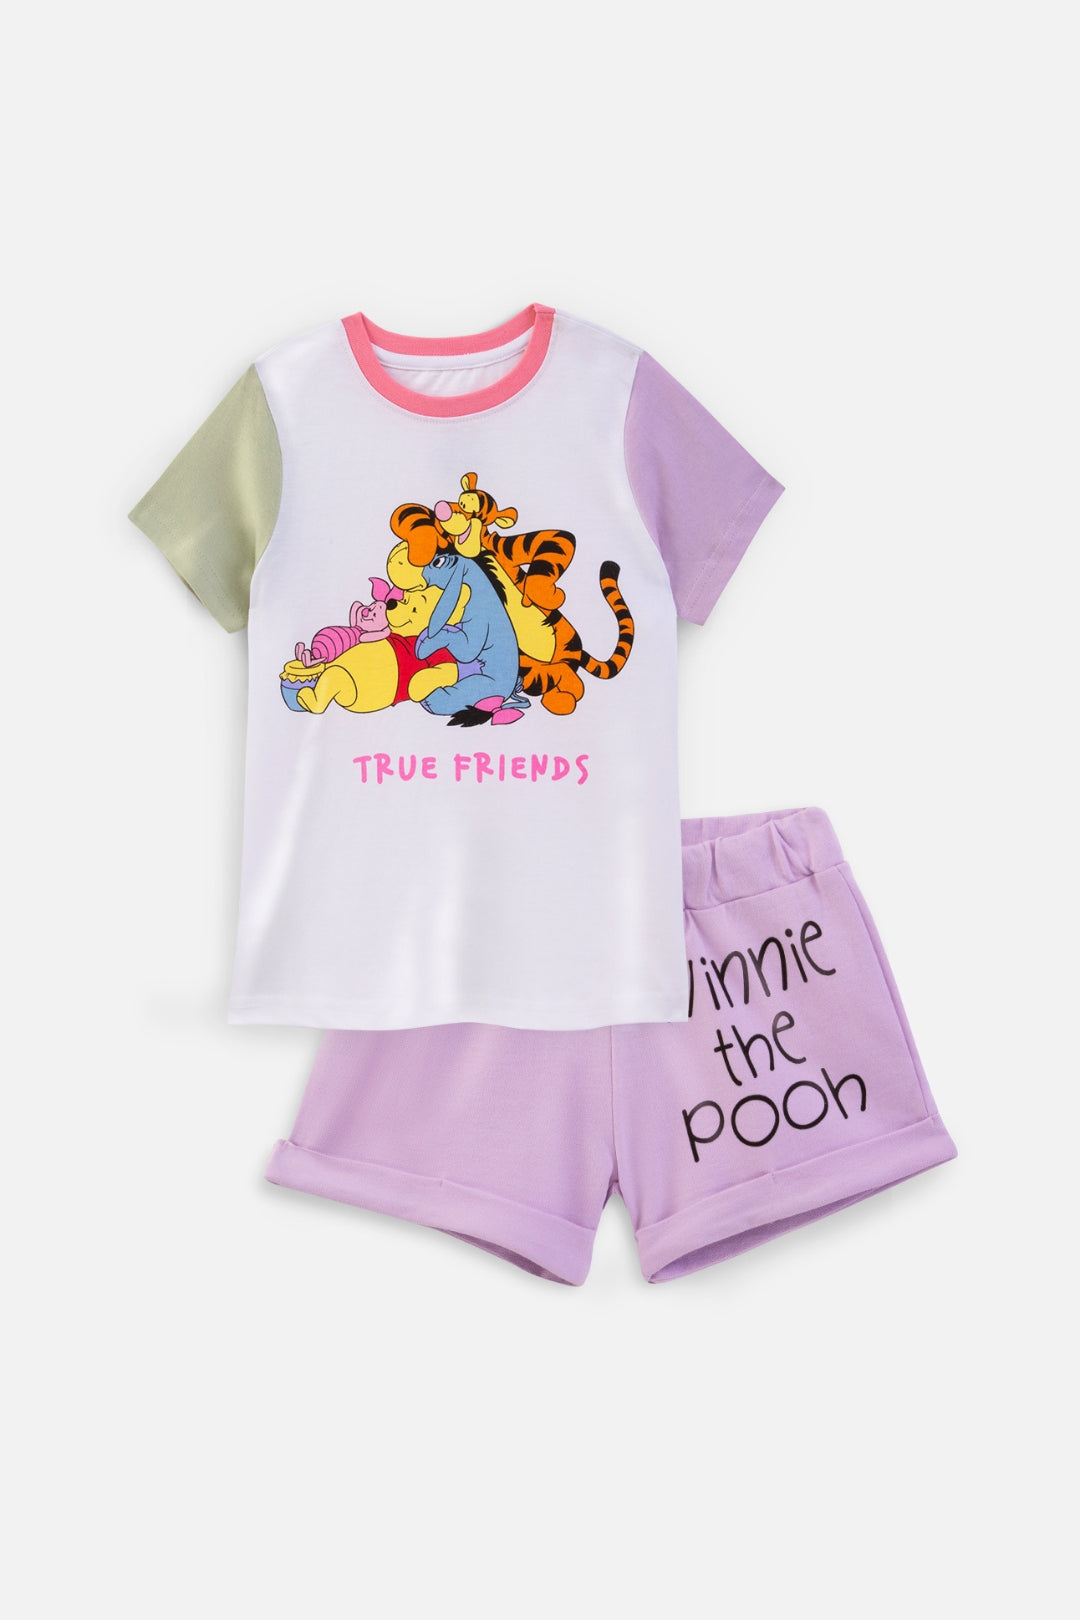 Pooh & Friends colourblocked Short set